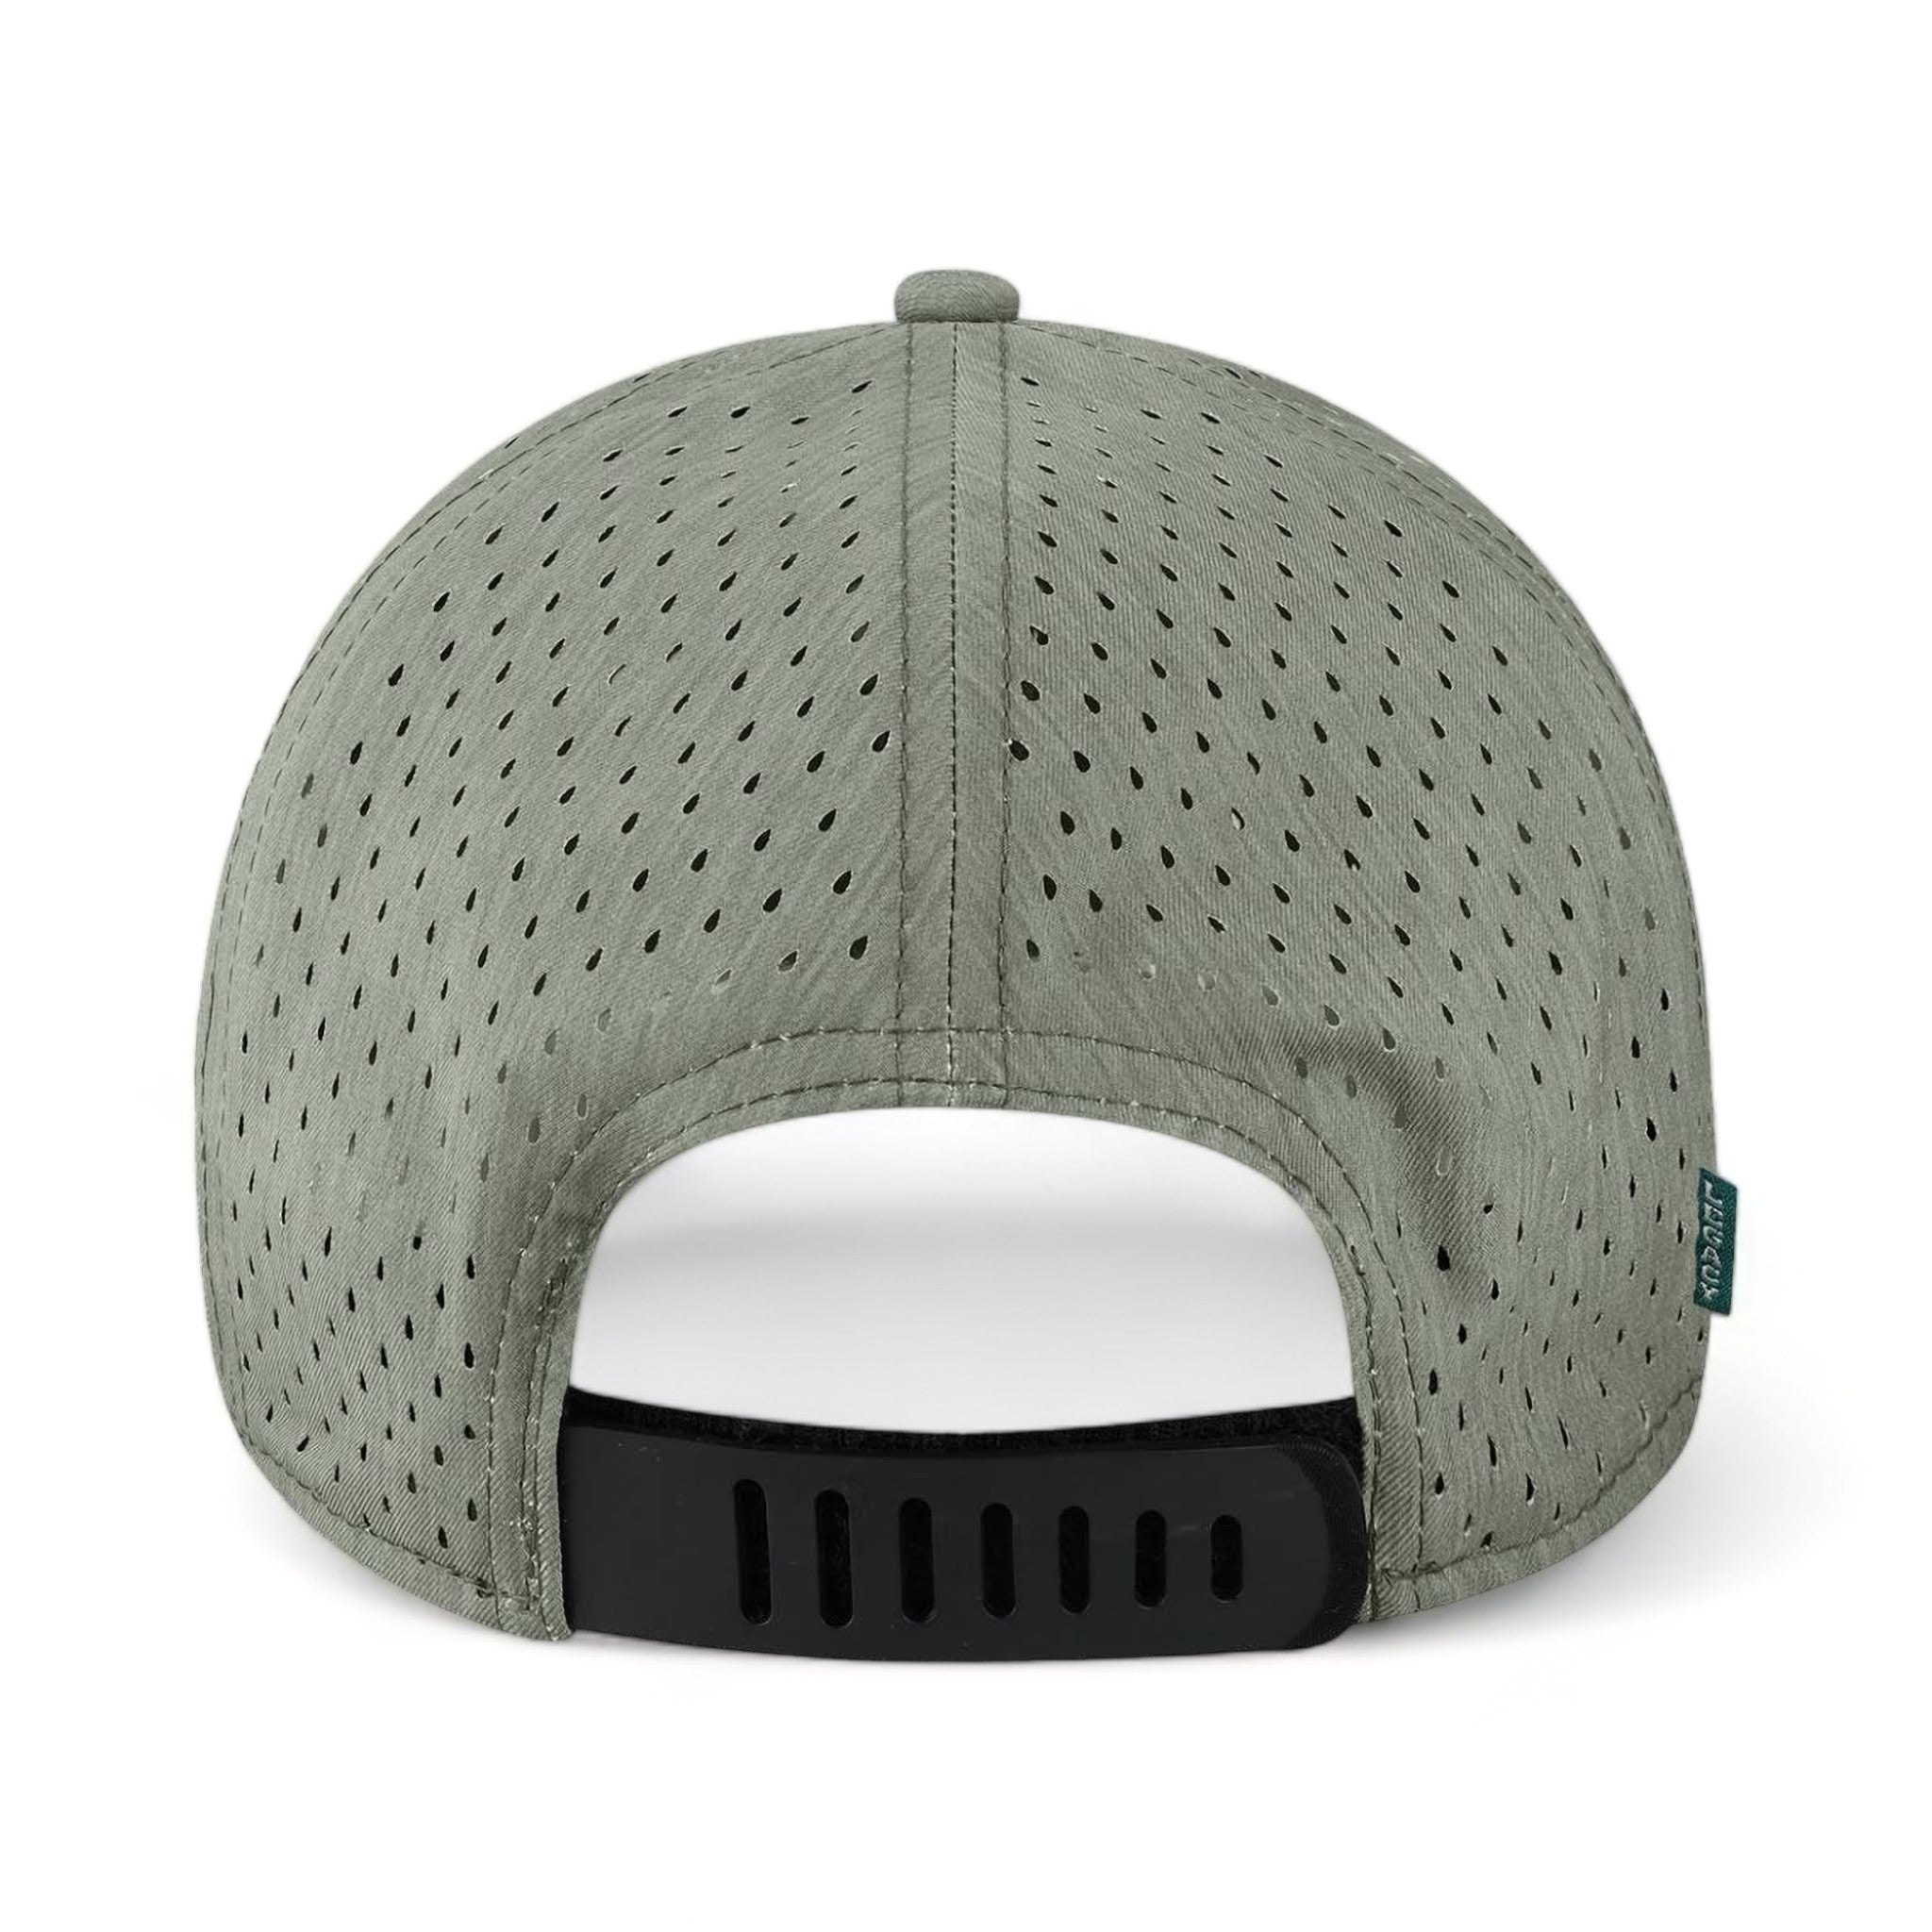 Back view of LEGACY REMPA custom hat in eco dark grey